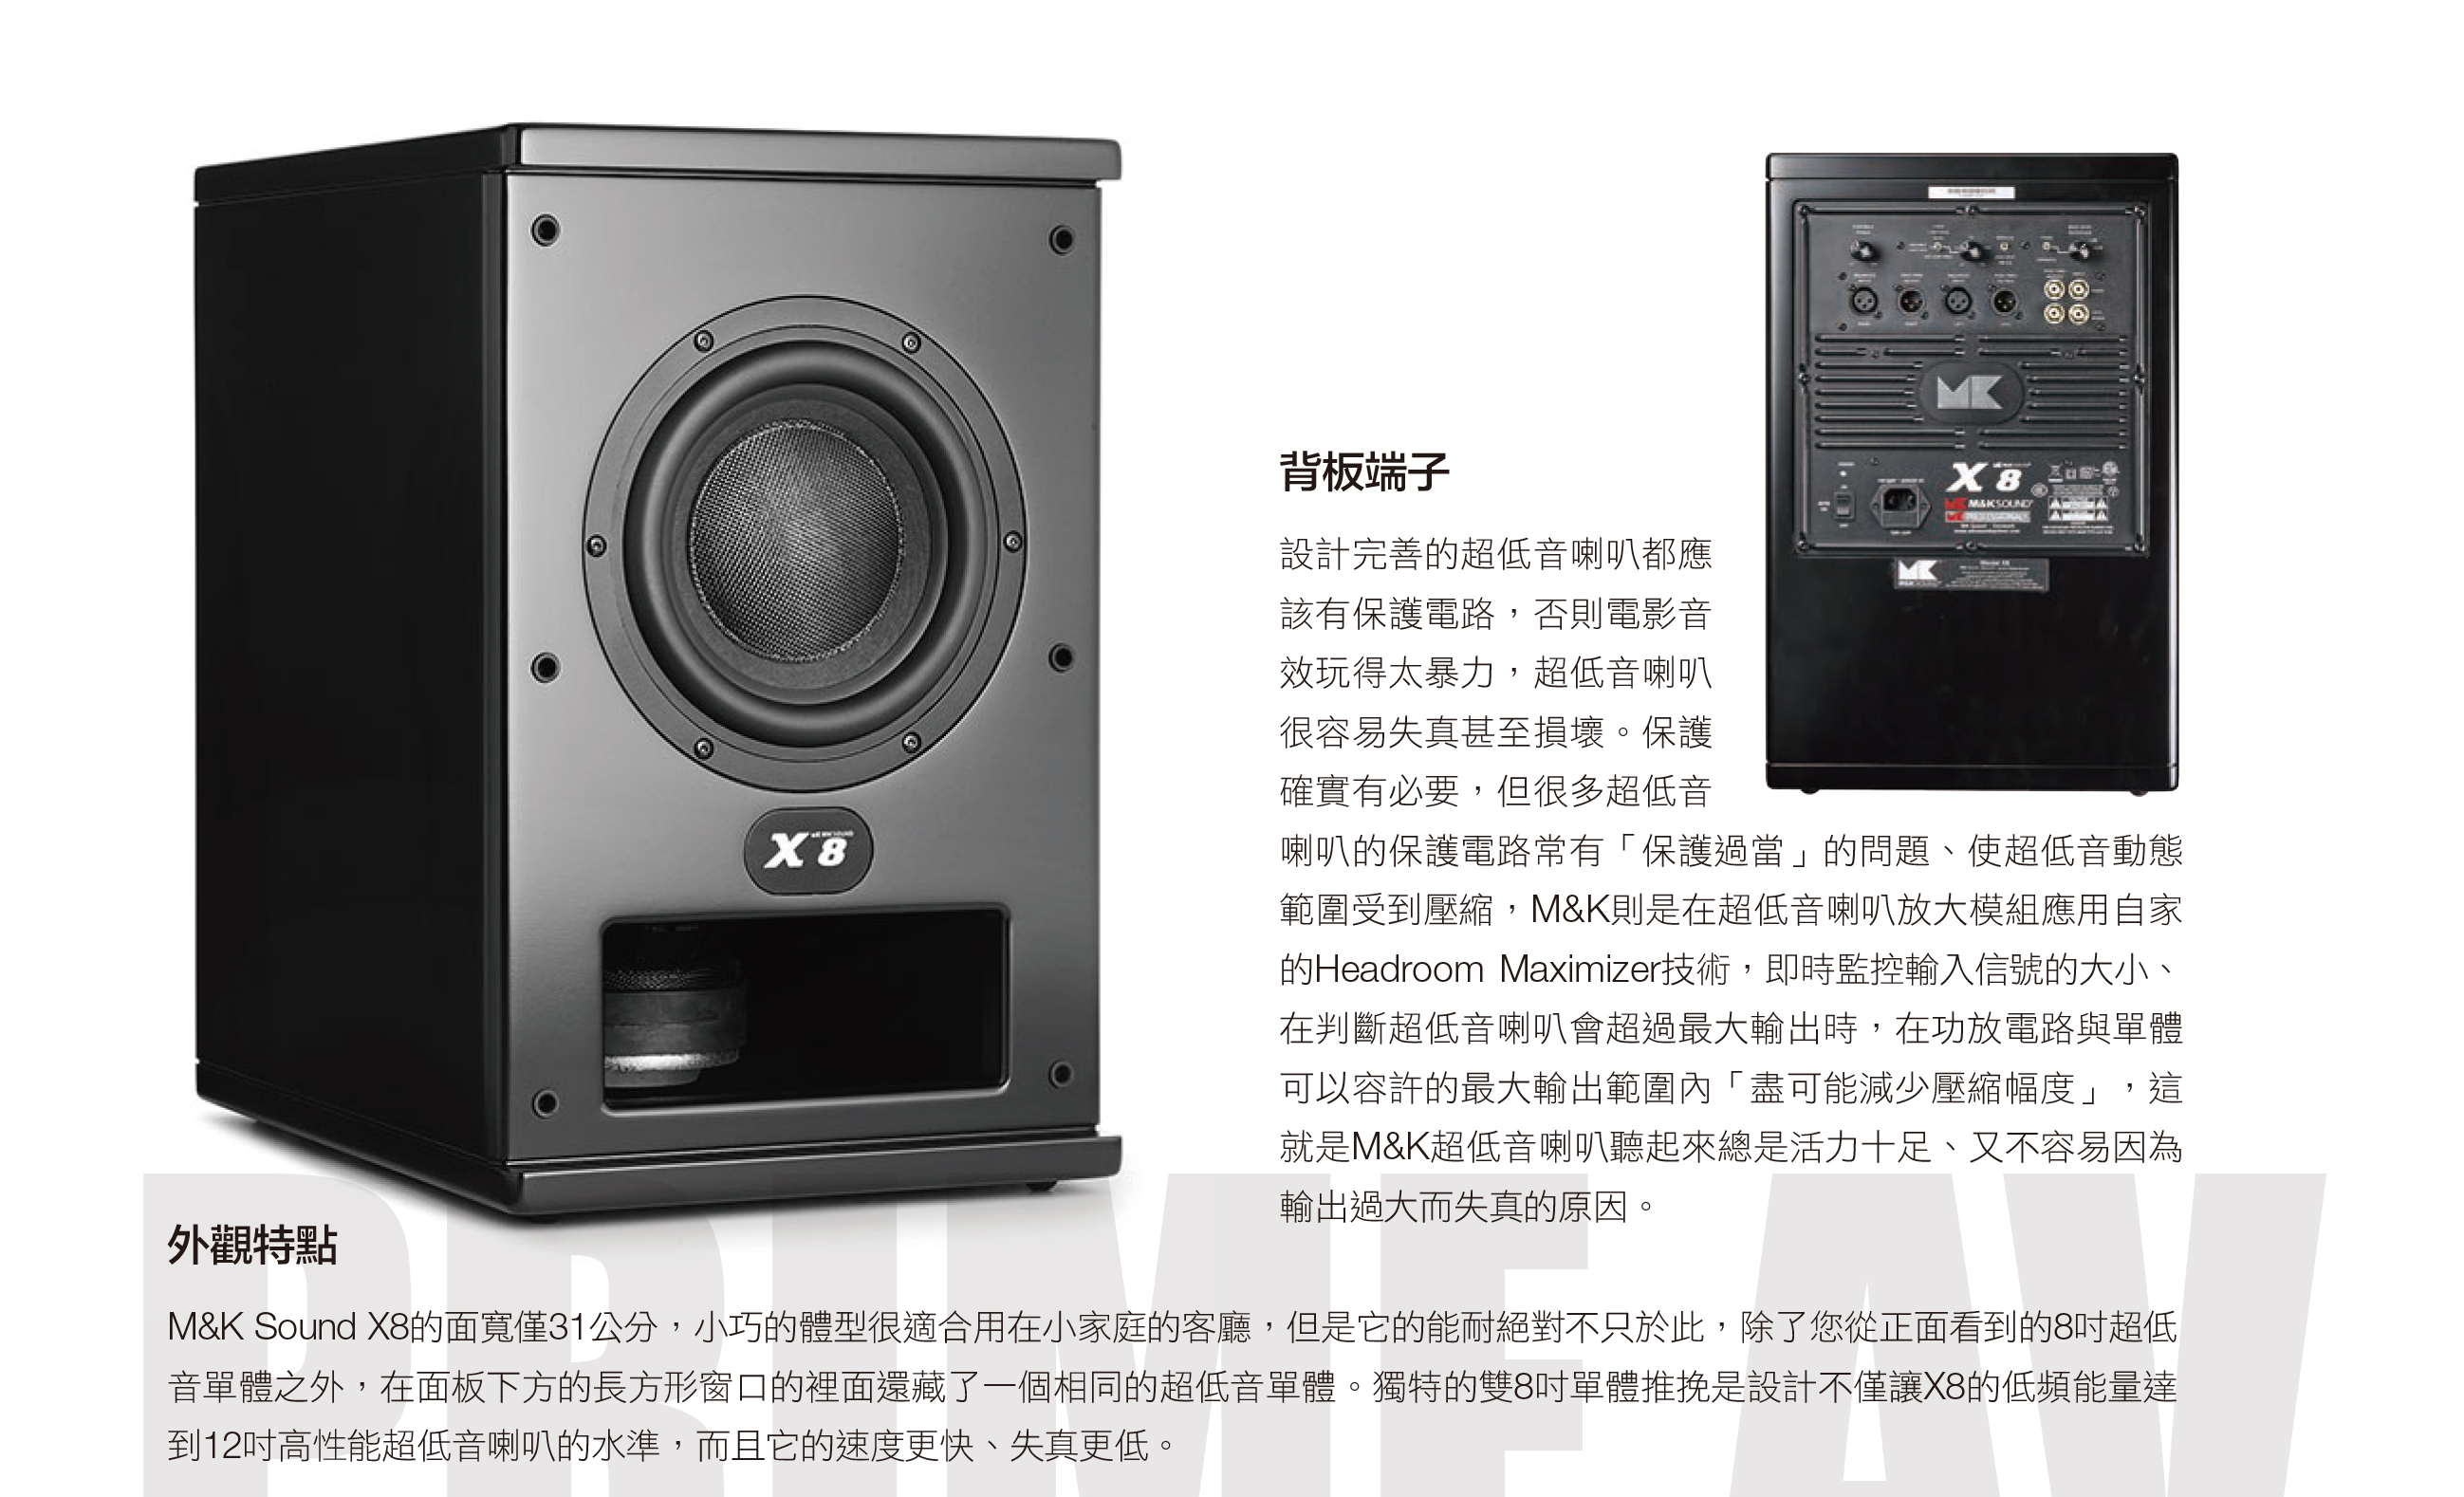 M&K Sound X8-外觀特點、背板端子